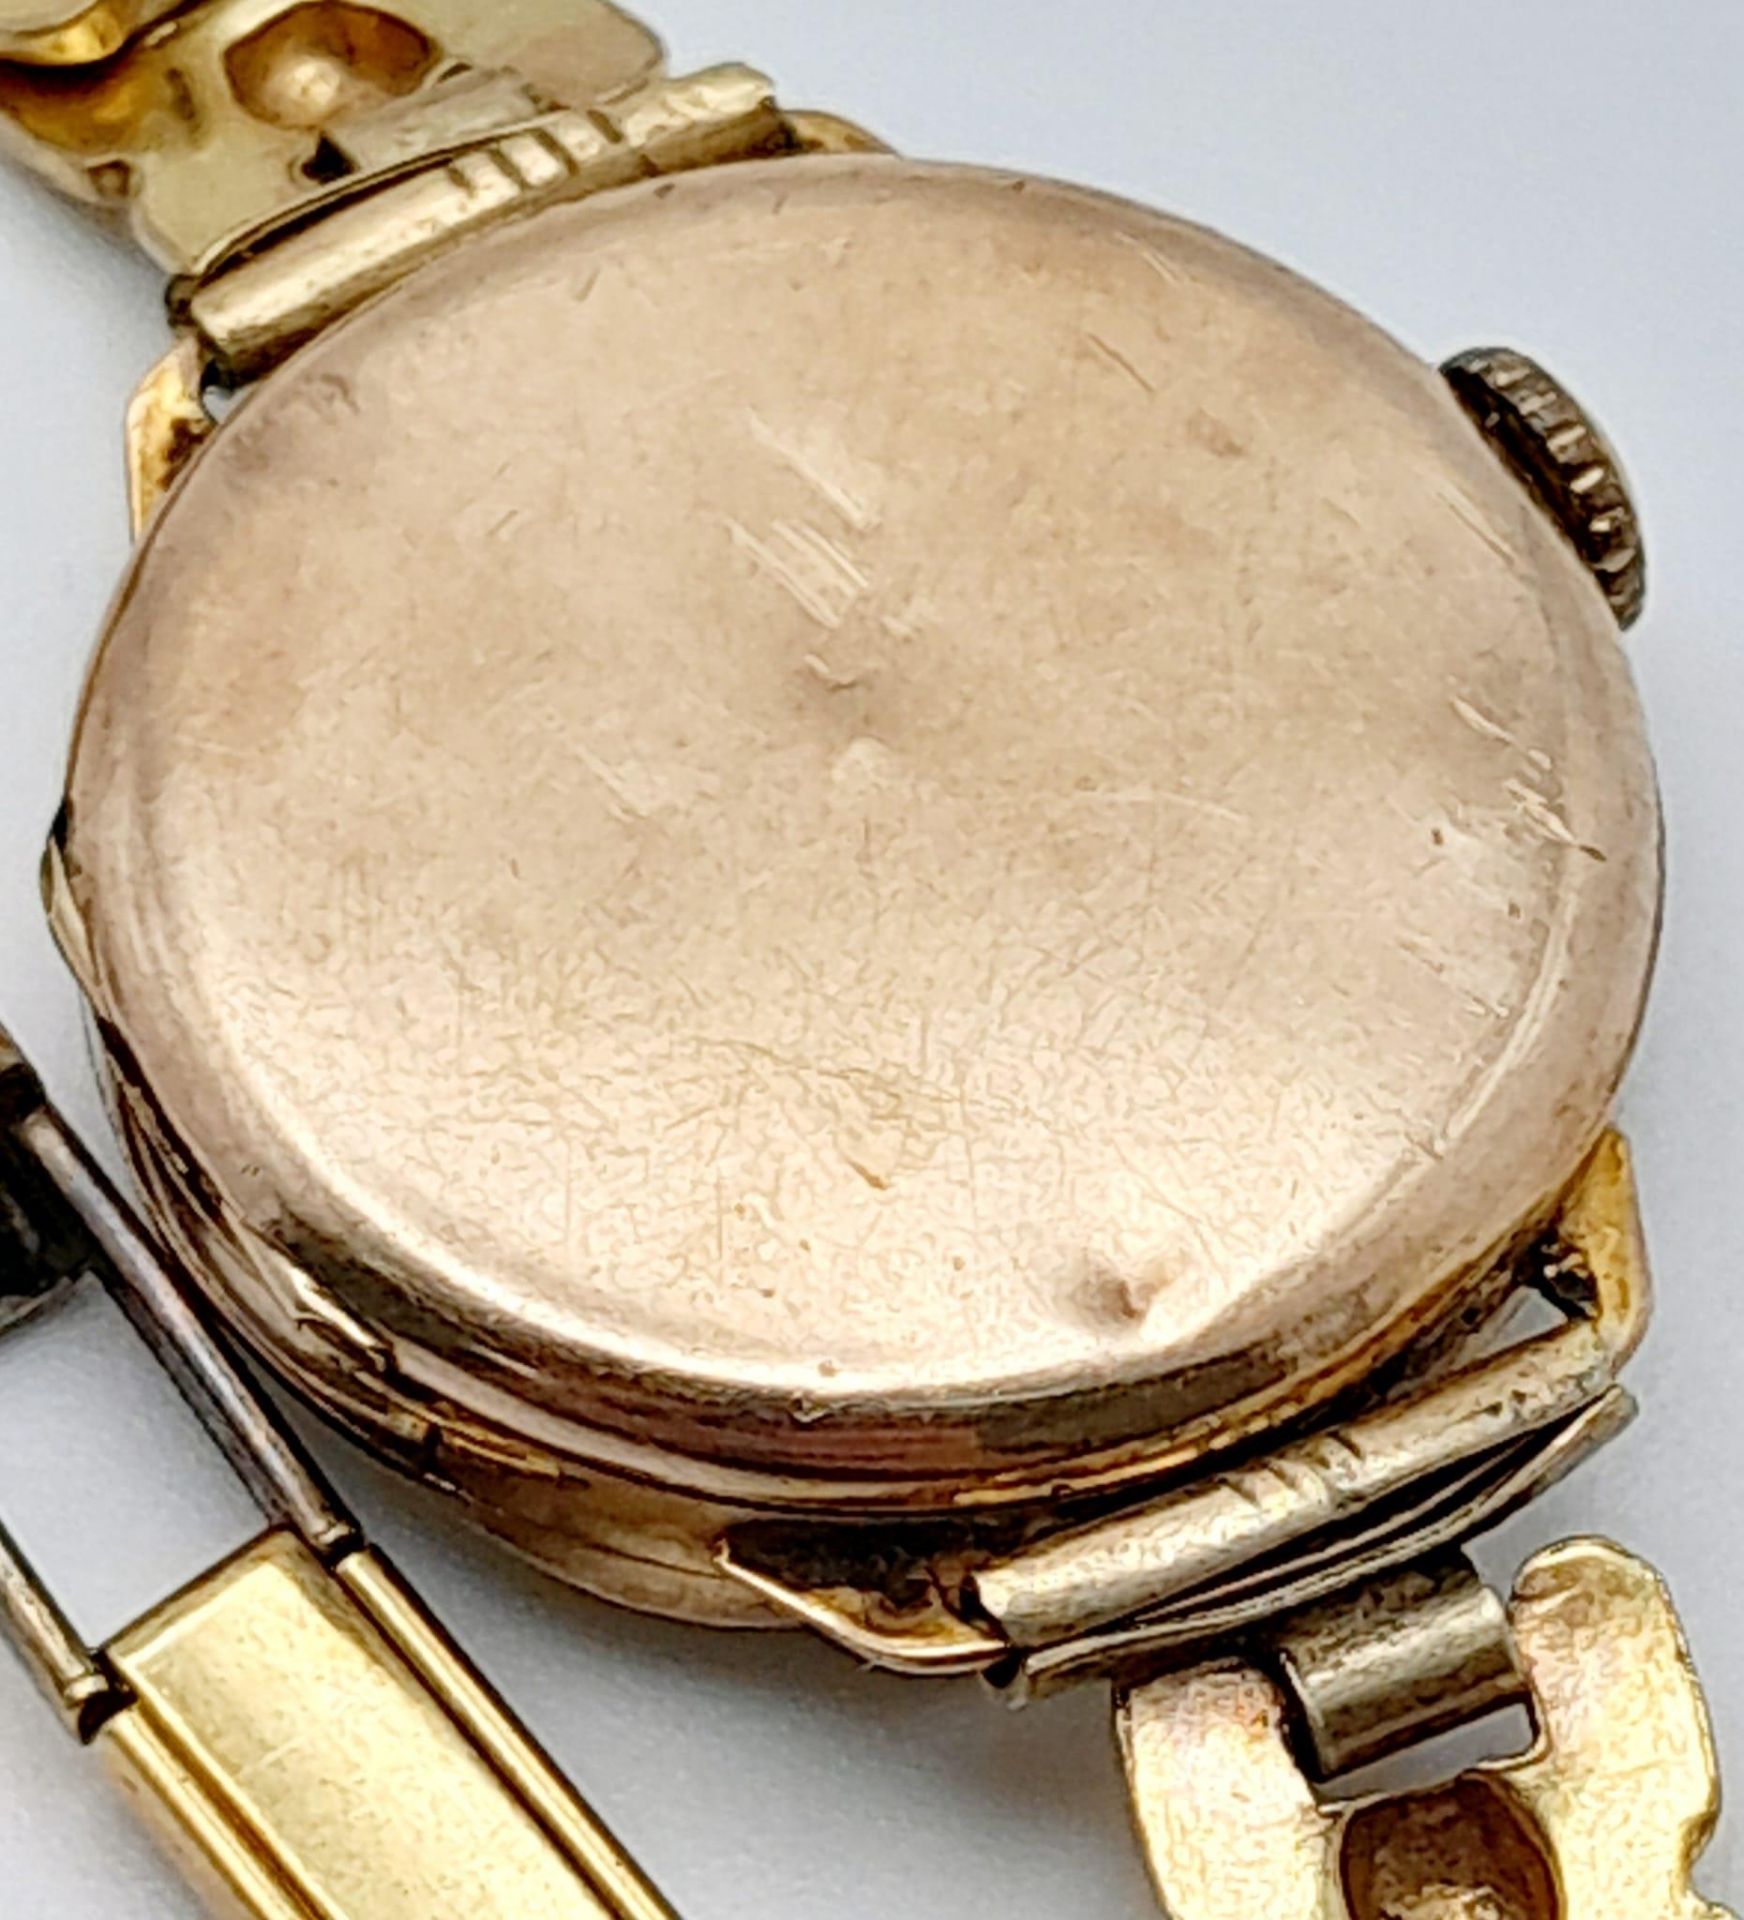 A Vintage 9K Gold Cased Everite Ladies Watch. Gold plated bracelet. 9K gold case - 21mm. Patinaed - Image 6 of 6